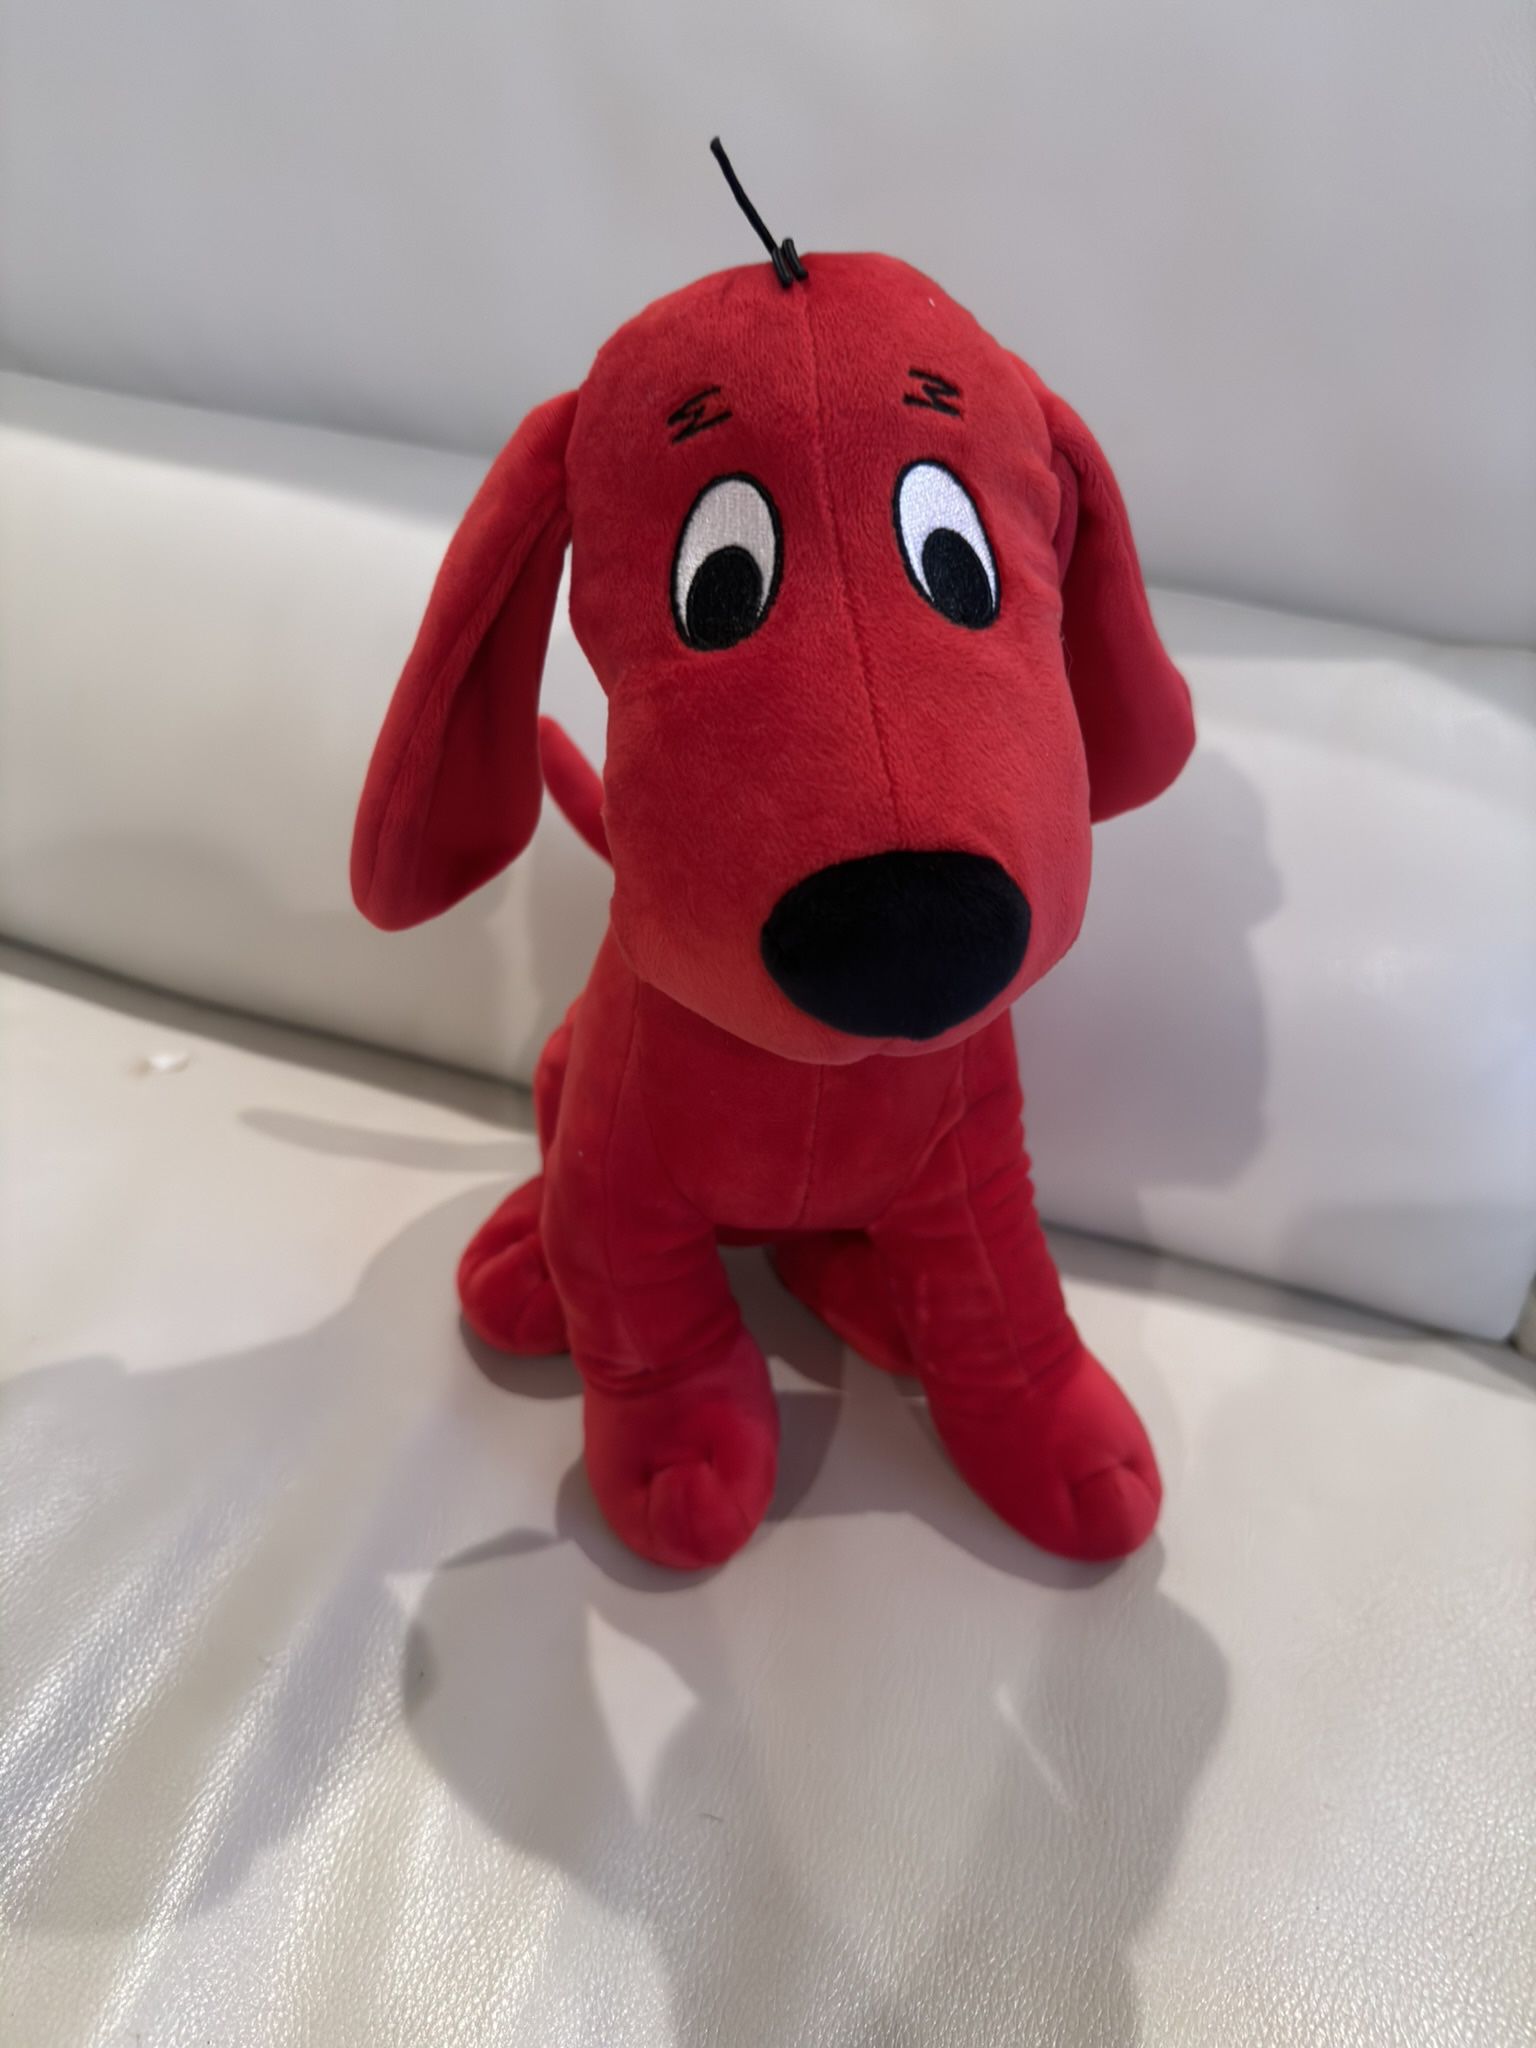 13" Plush Sitting Clifford The Big Red Dog Stuffed Animal Toy